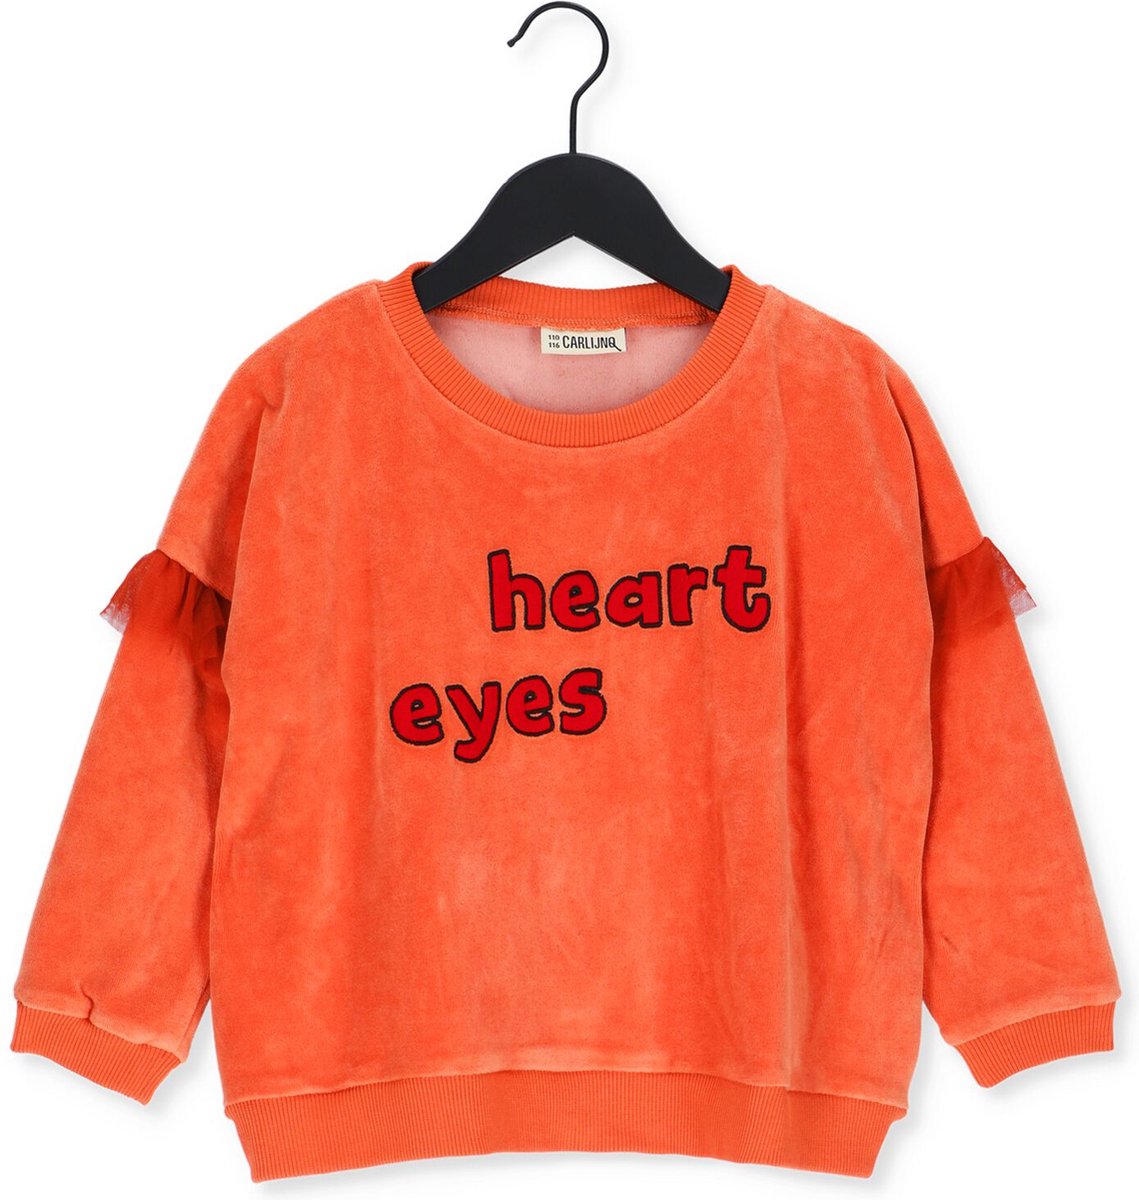 Carlijnq Heart Eyes - Sweater Girls With Tule Ruffles + Embroidery Truien & Vesten Meisjes - Sweater - Hoodie - Vest- Oranje - Maat 134/140